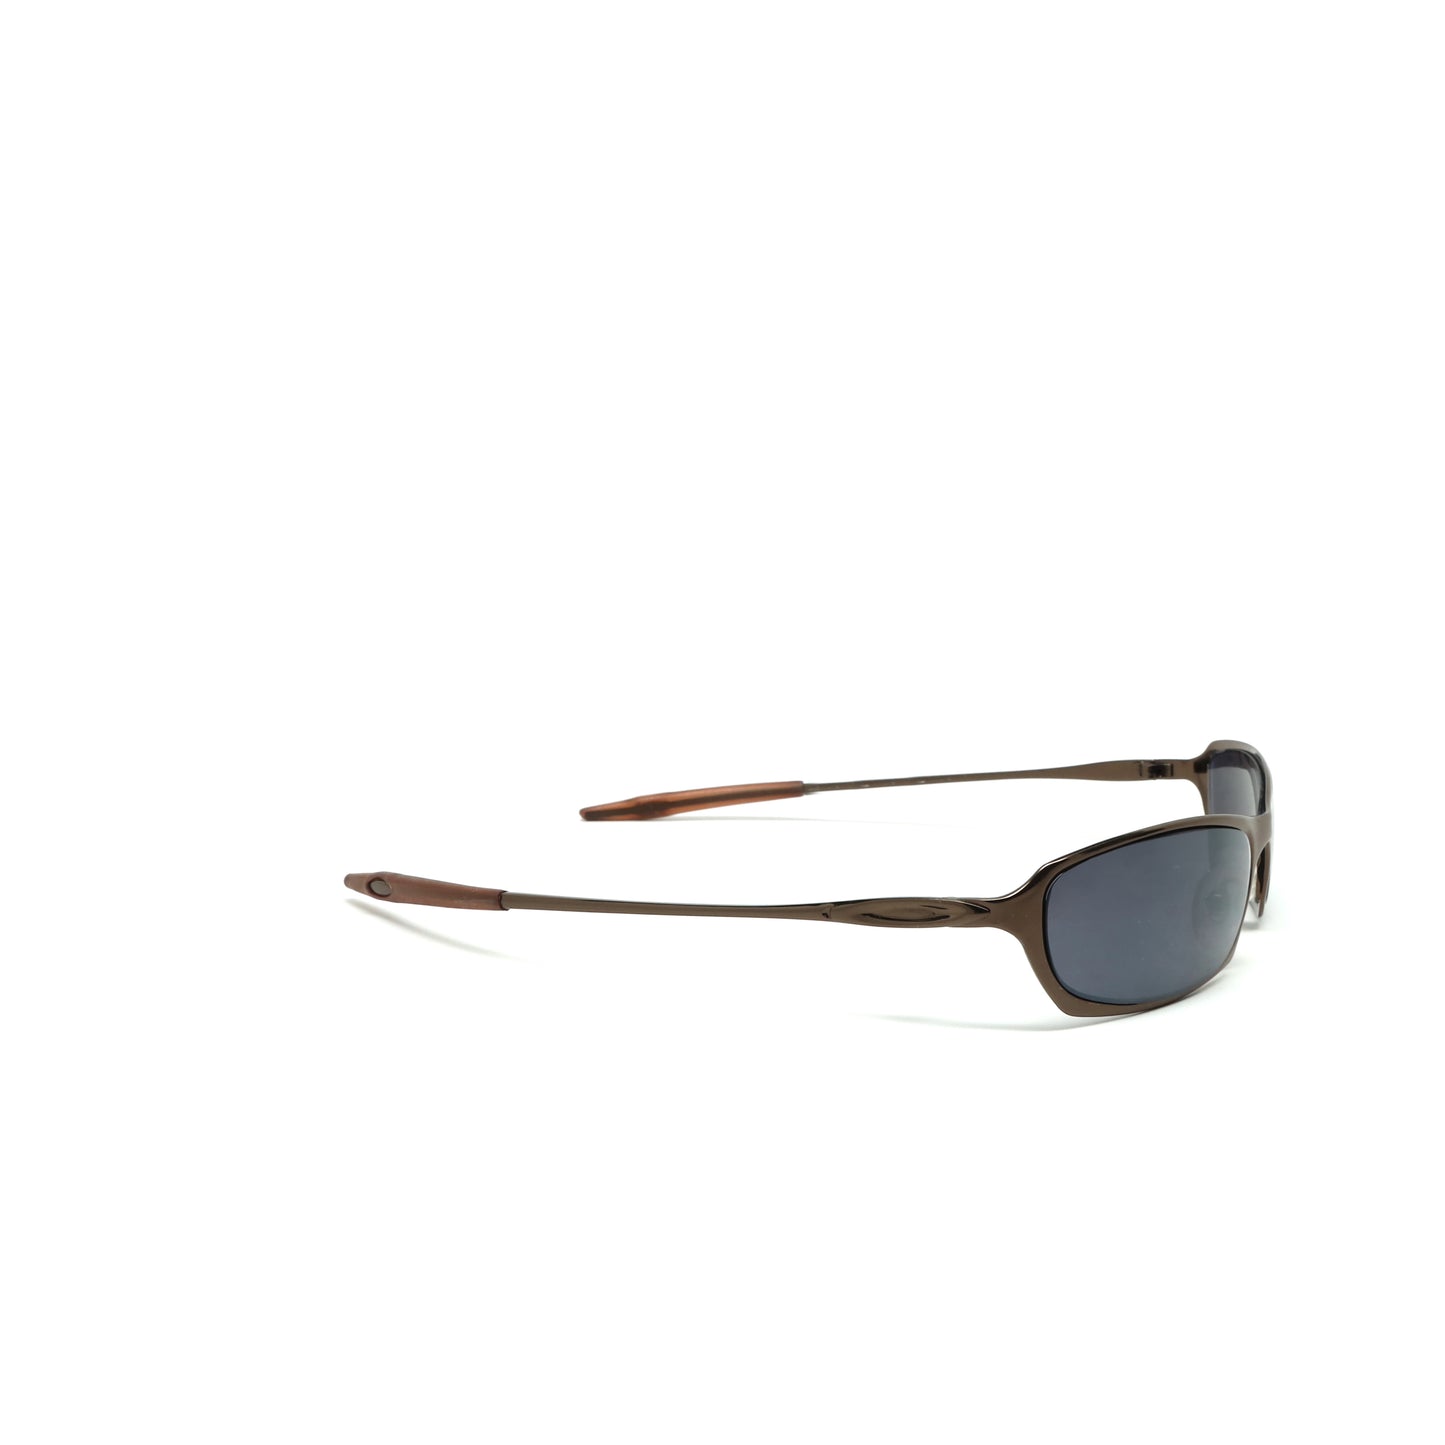 X-Static 2001 Thin Wraparound Sunglasses - Bronze/Grey